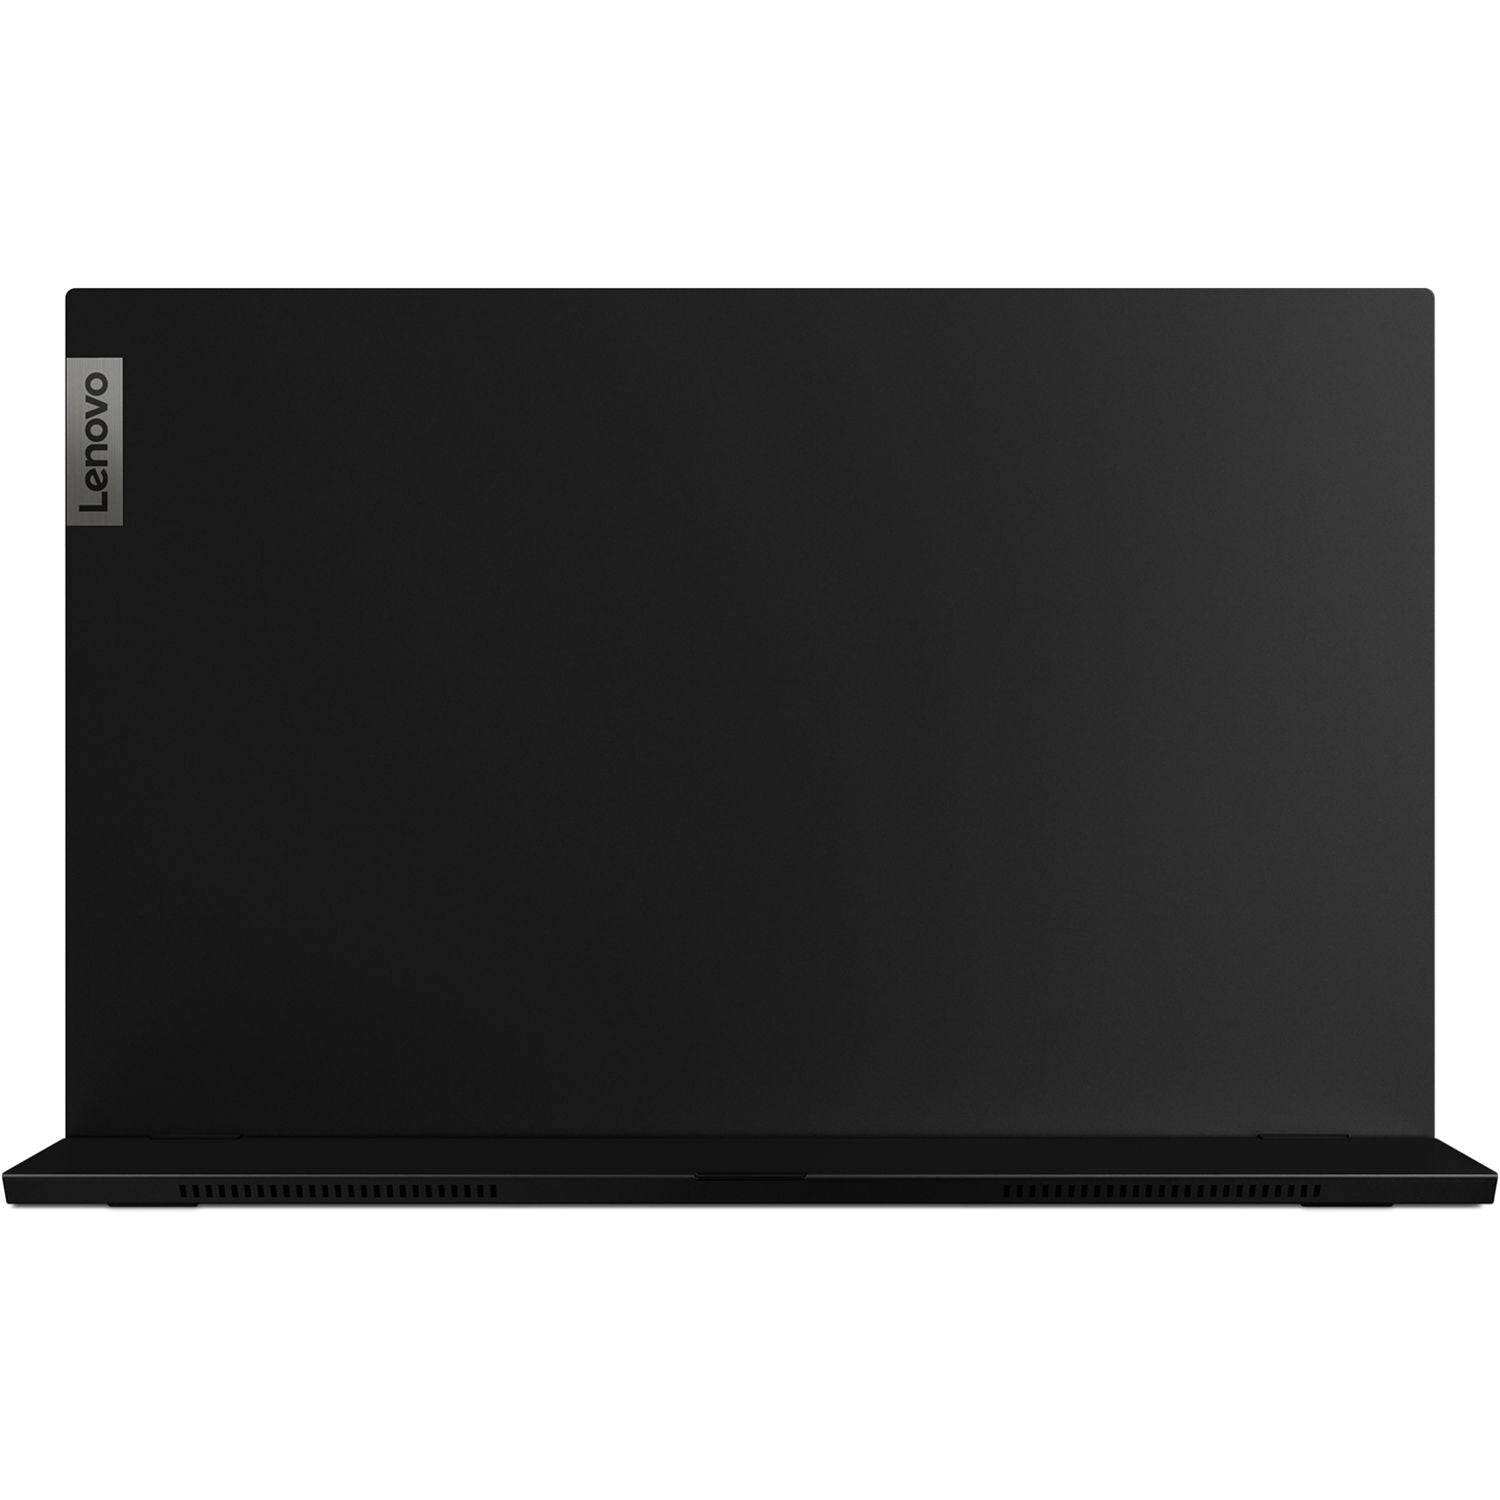 Lenovo ThinkVision M14 14&quot; Full HD 1920x1080 IPS Monitor - Black (Refurbished)